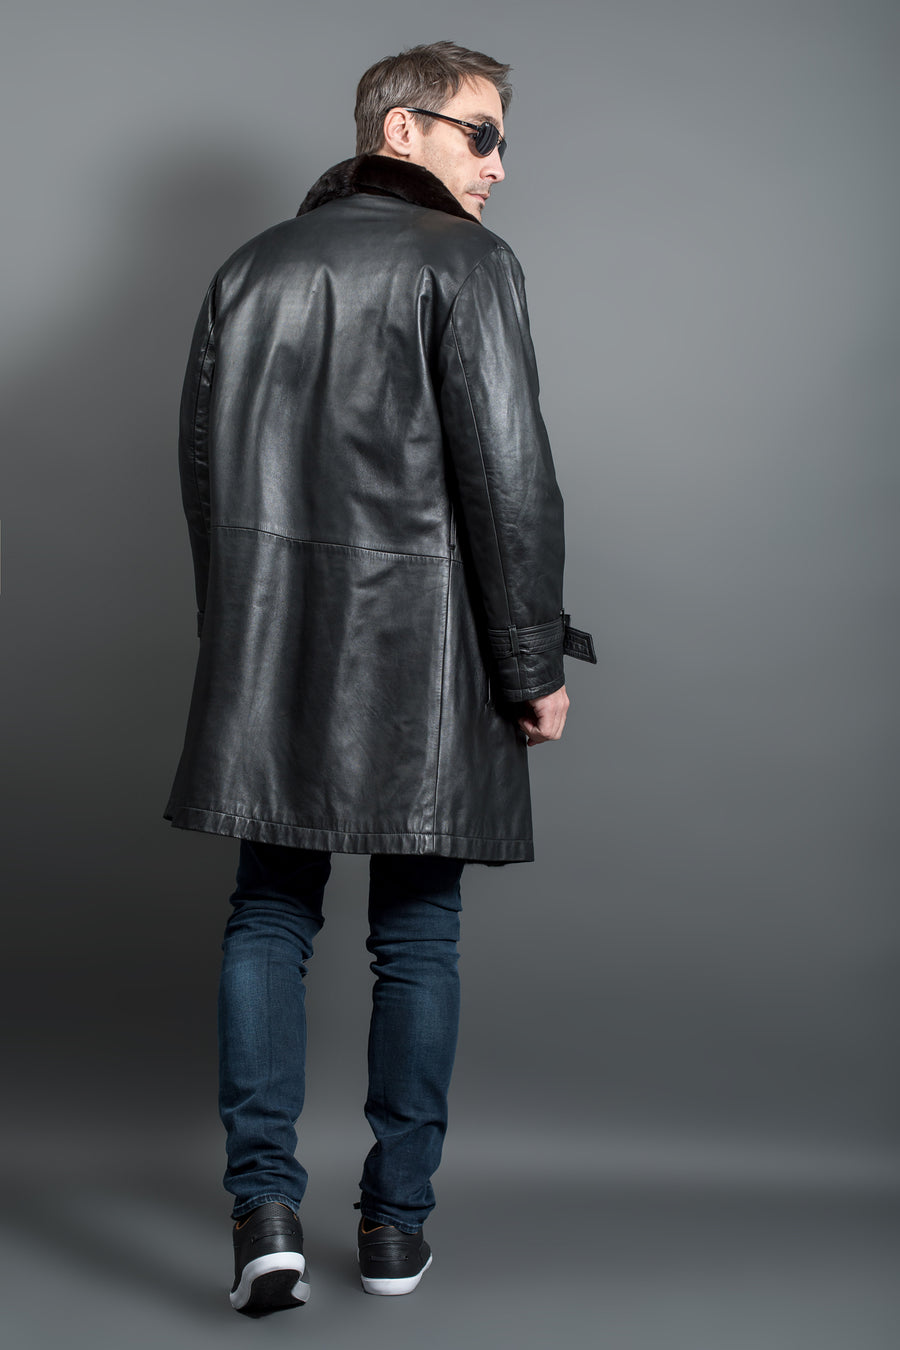 Dark Blue Mink Fur Jacket for Men with Detachable Leather Sleeves